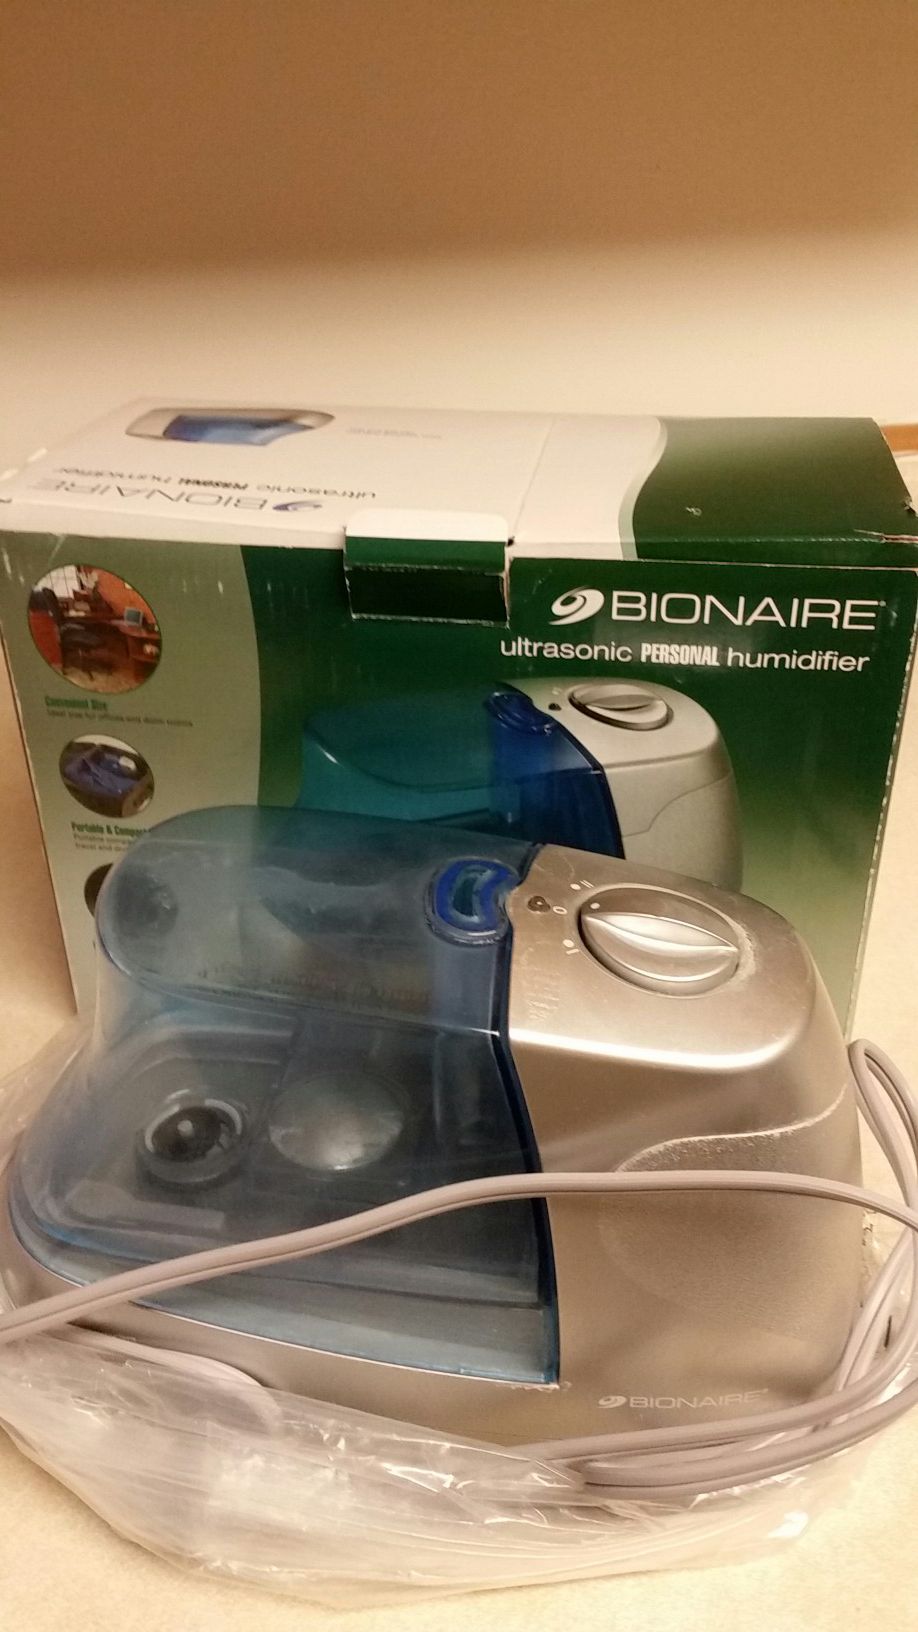 Bionaire Ultrasonic personal humidifier.